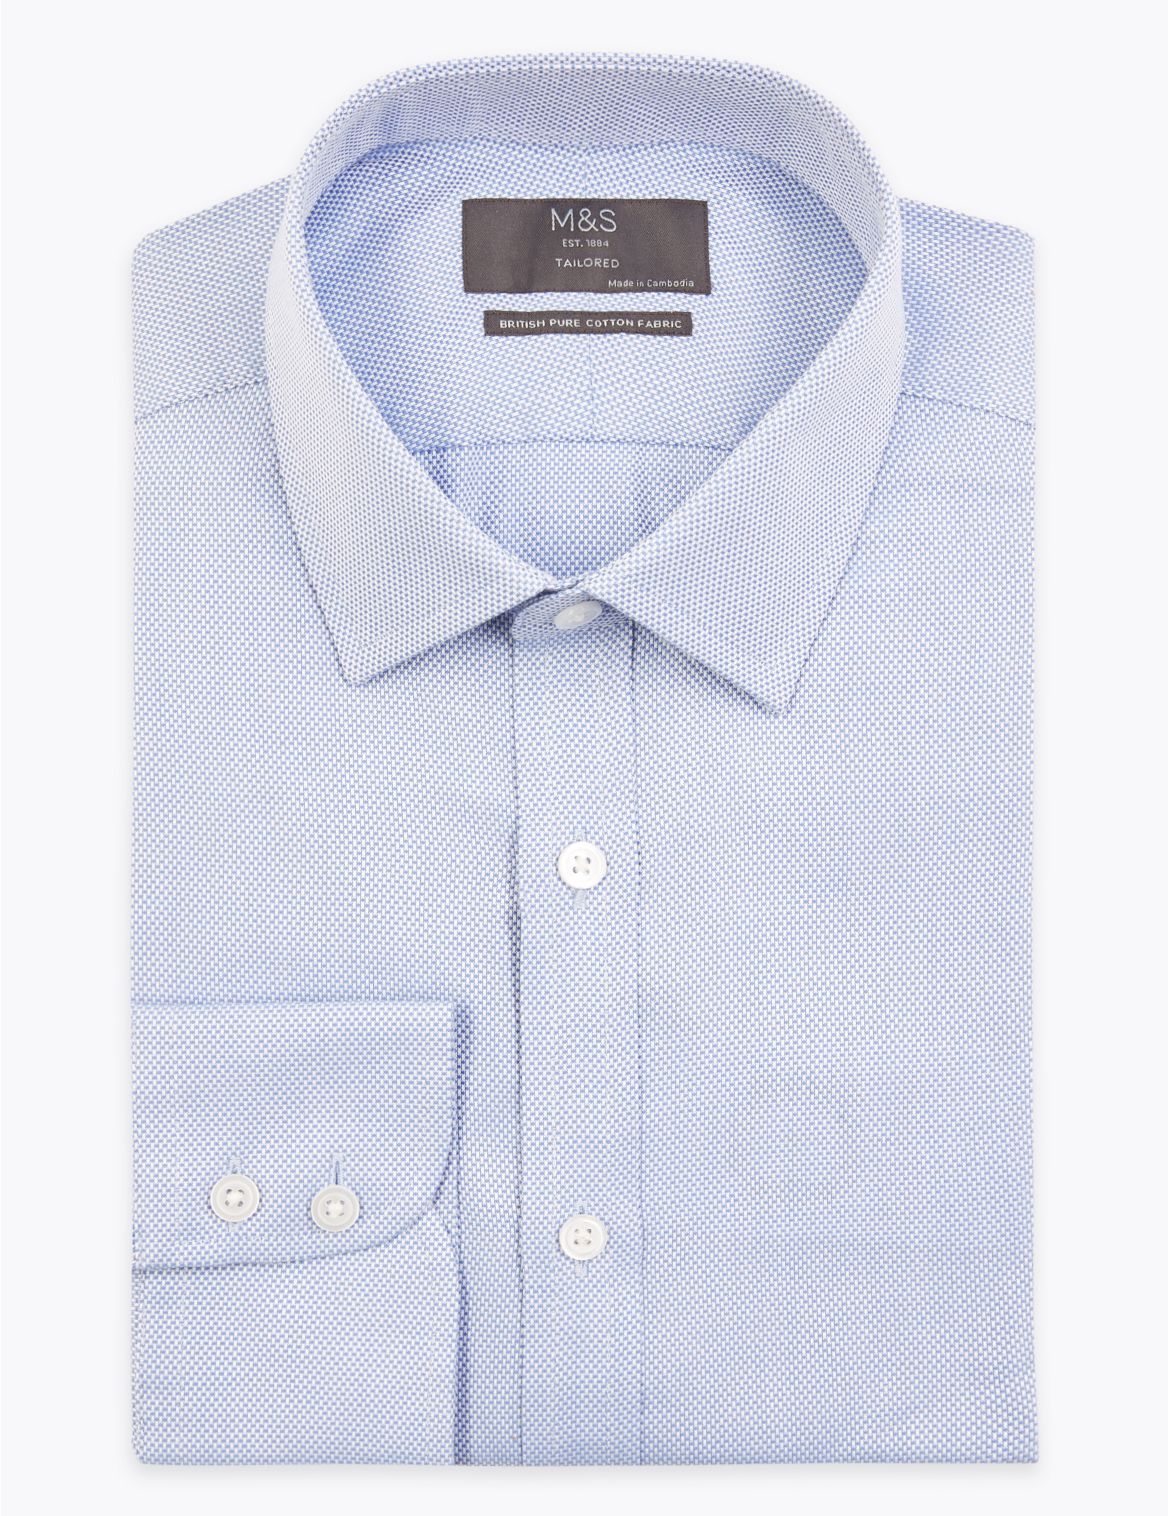 Tailored Fit English Fine Cotton Shirt blue